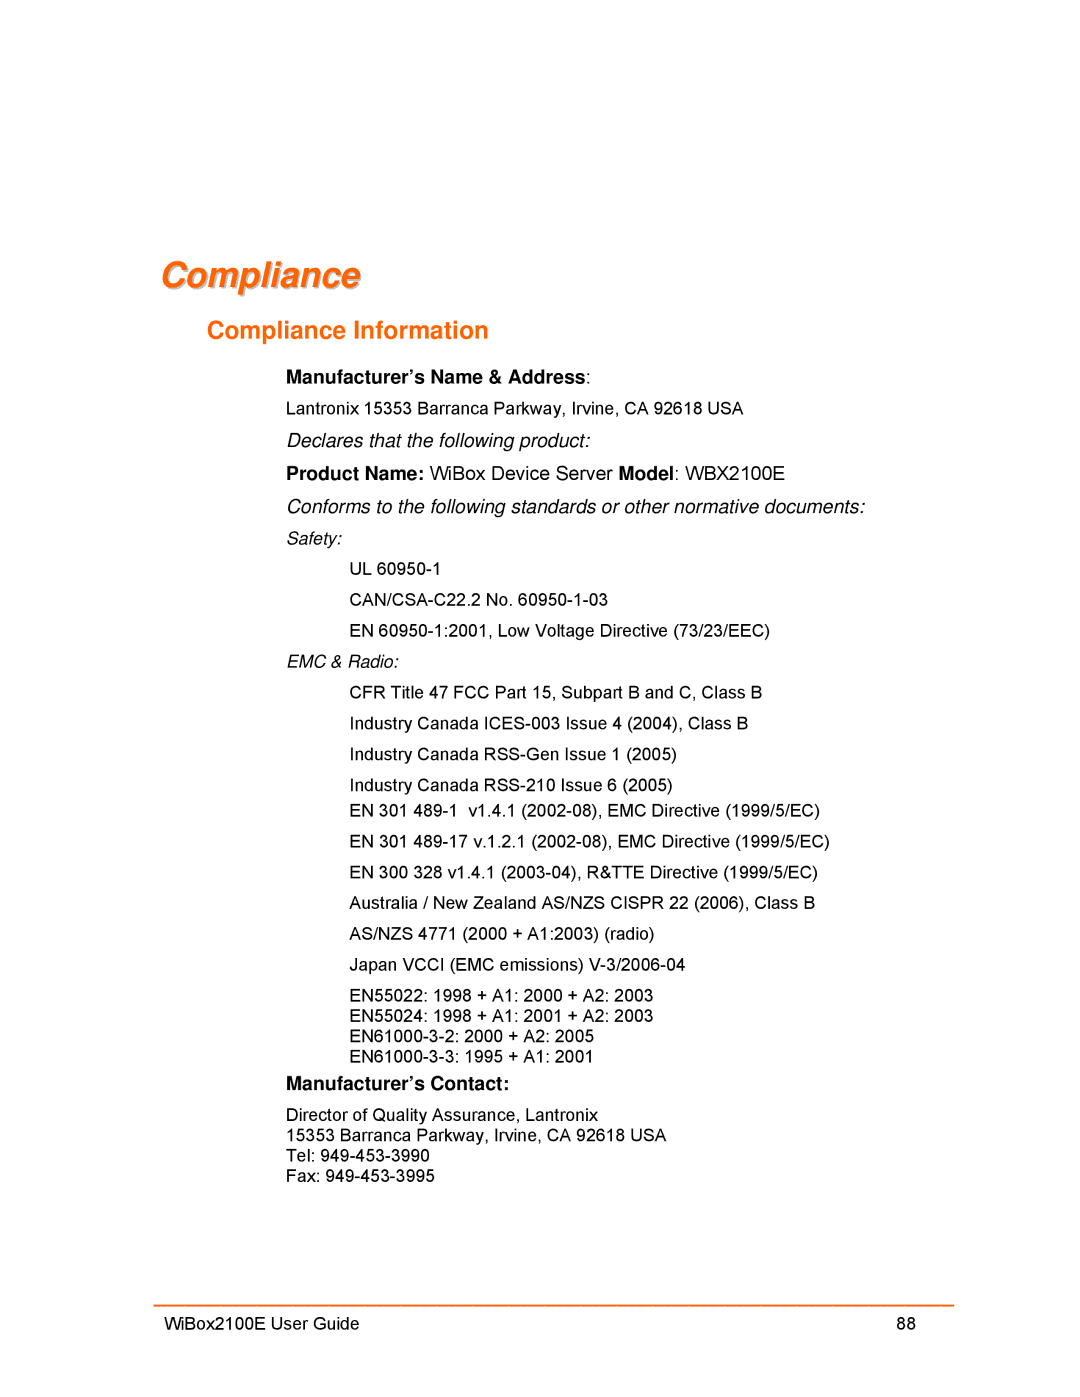 Lantronix Ethernet manual Compliance Information 